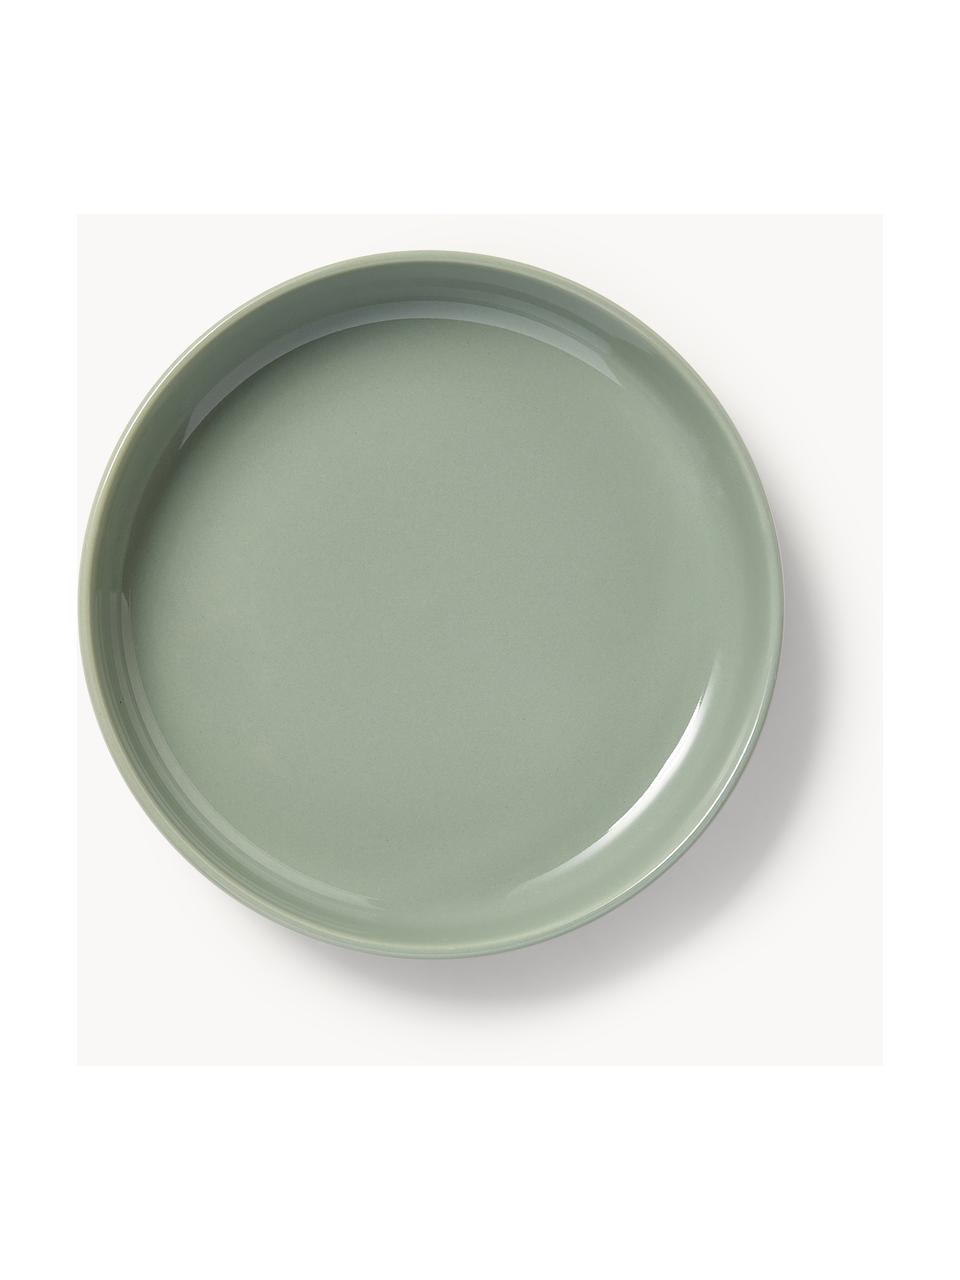 Piatti per pasta in porcellana Nessa 4 pz, Porcellana a pasta dura di alta qualità smaltata, Verde salvia lucido, Ø 21 cm